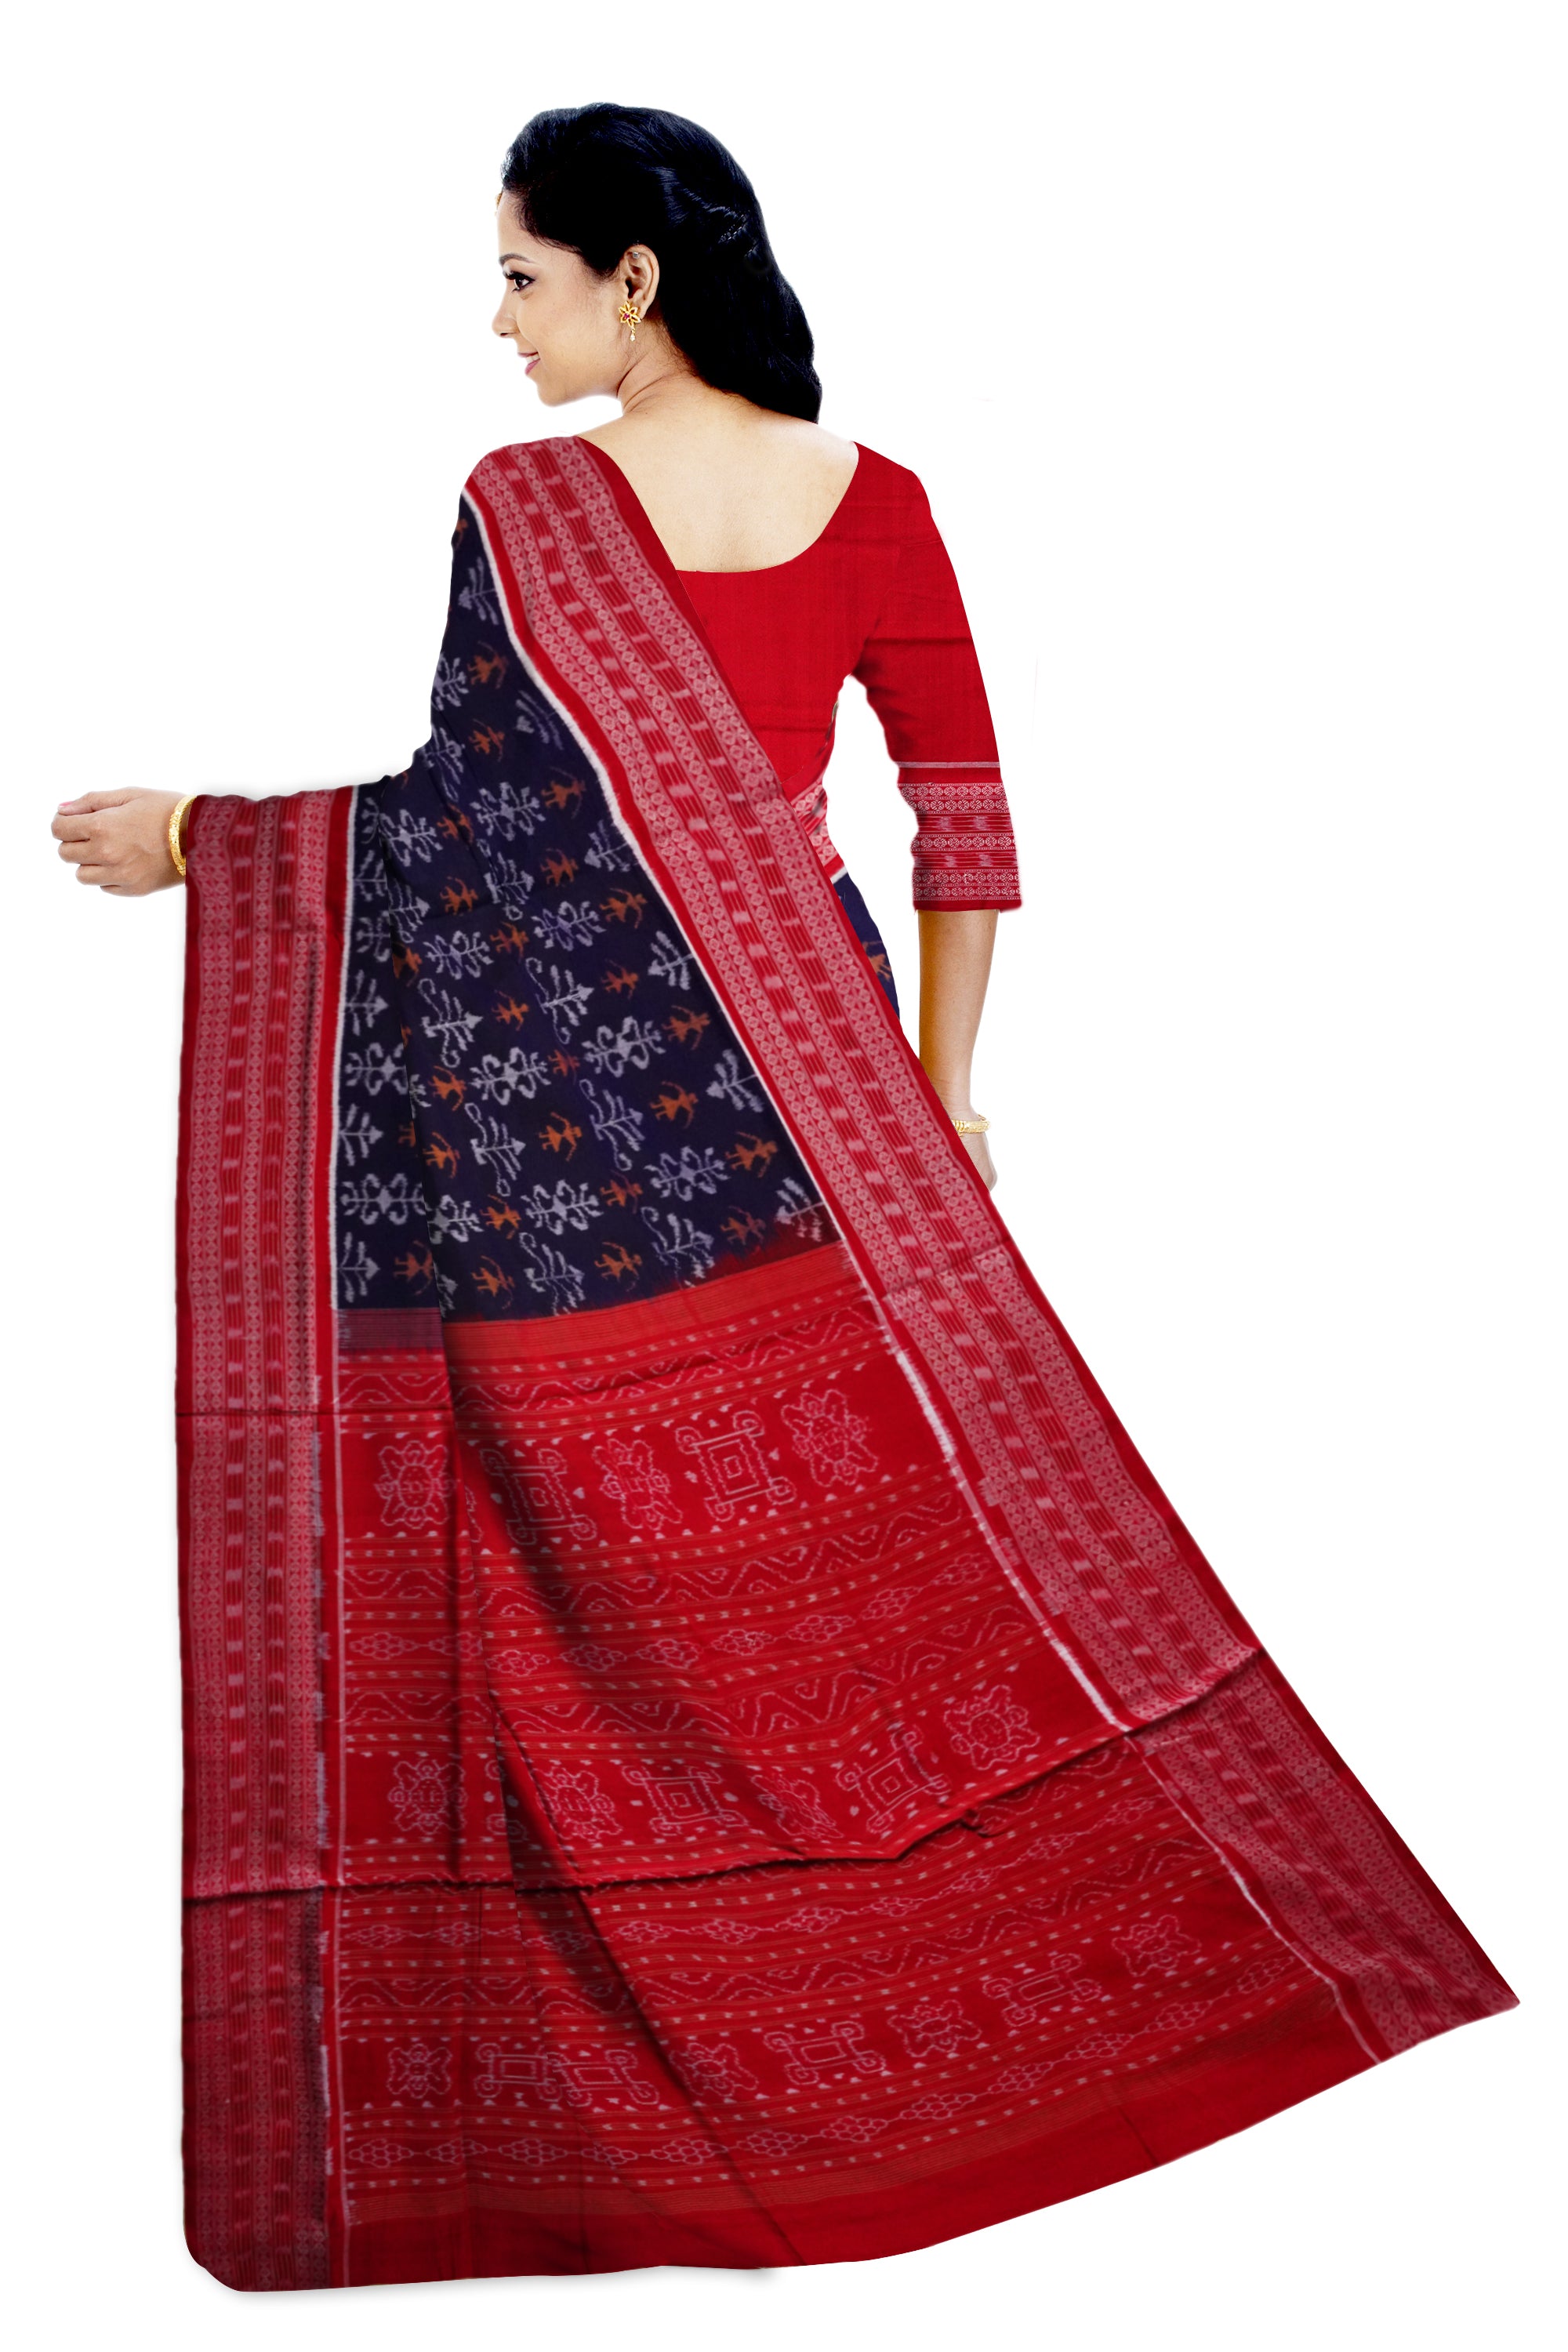 Copy of Copy of Different letter pattern Sambalpuri cotton saree is black and Deeppink color. - Koshali Arts & Crafts Enterprise